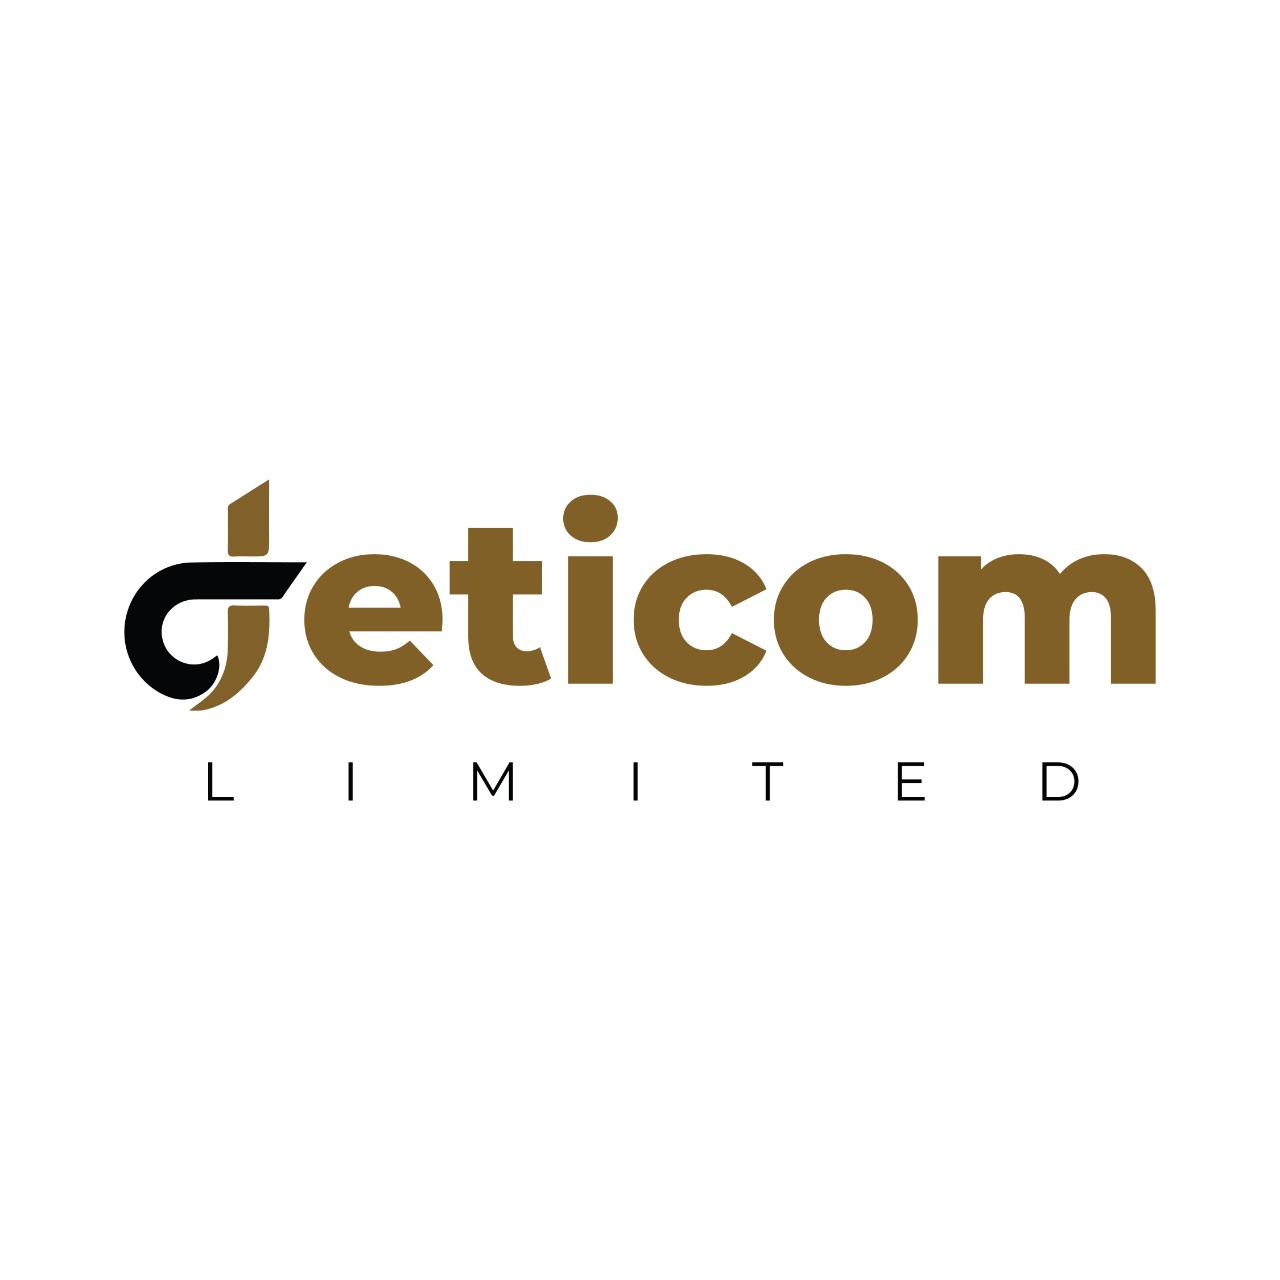 Deticom Limited